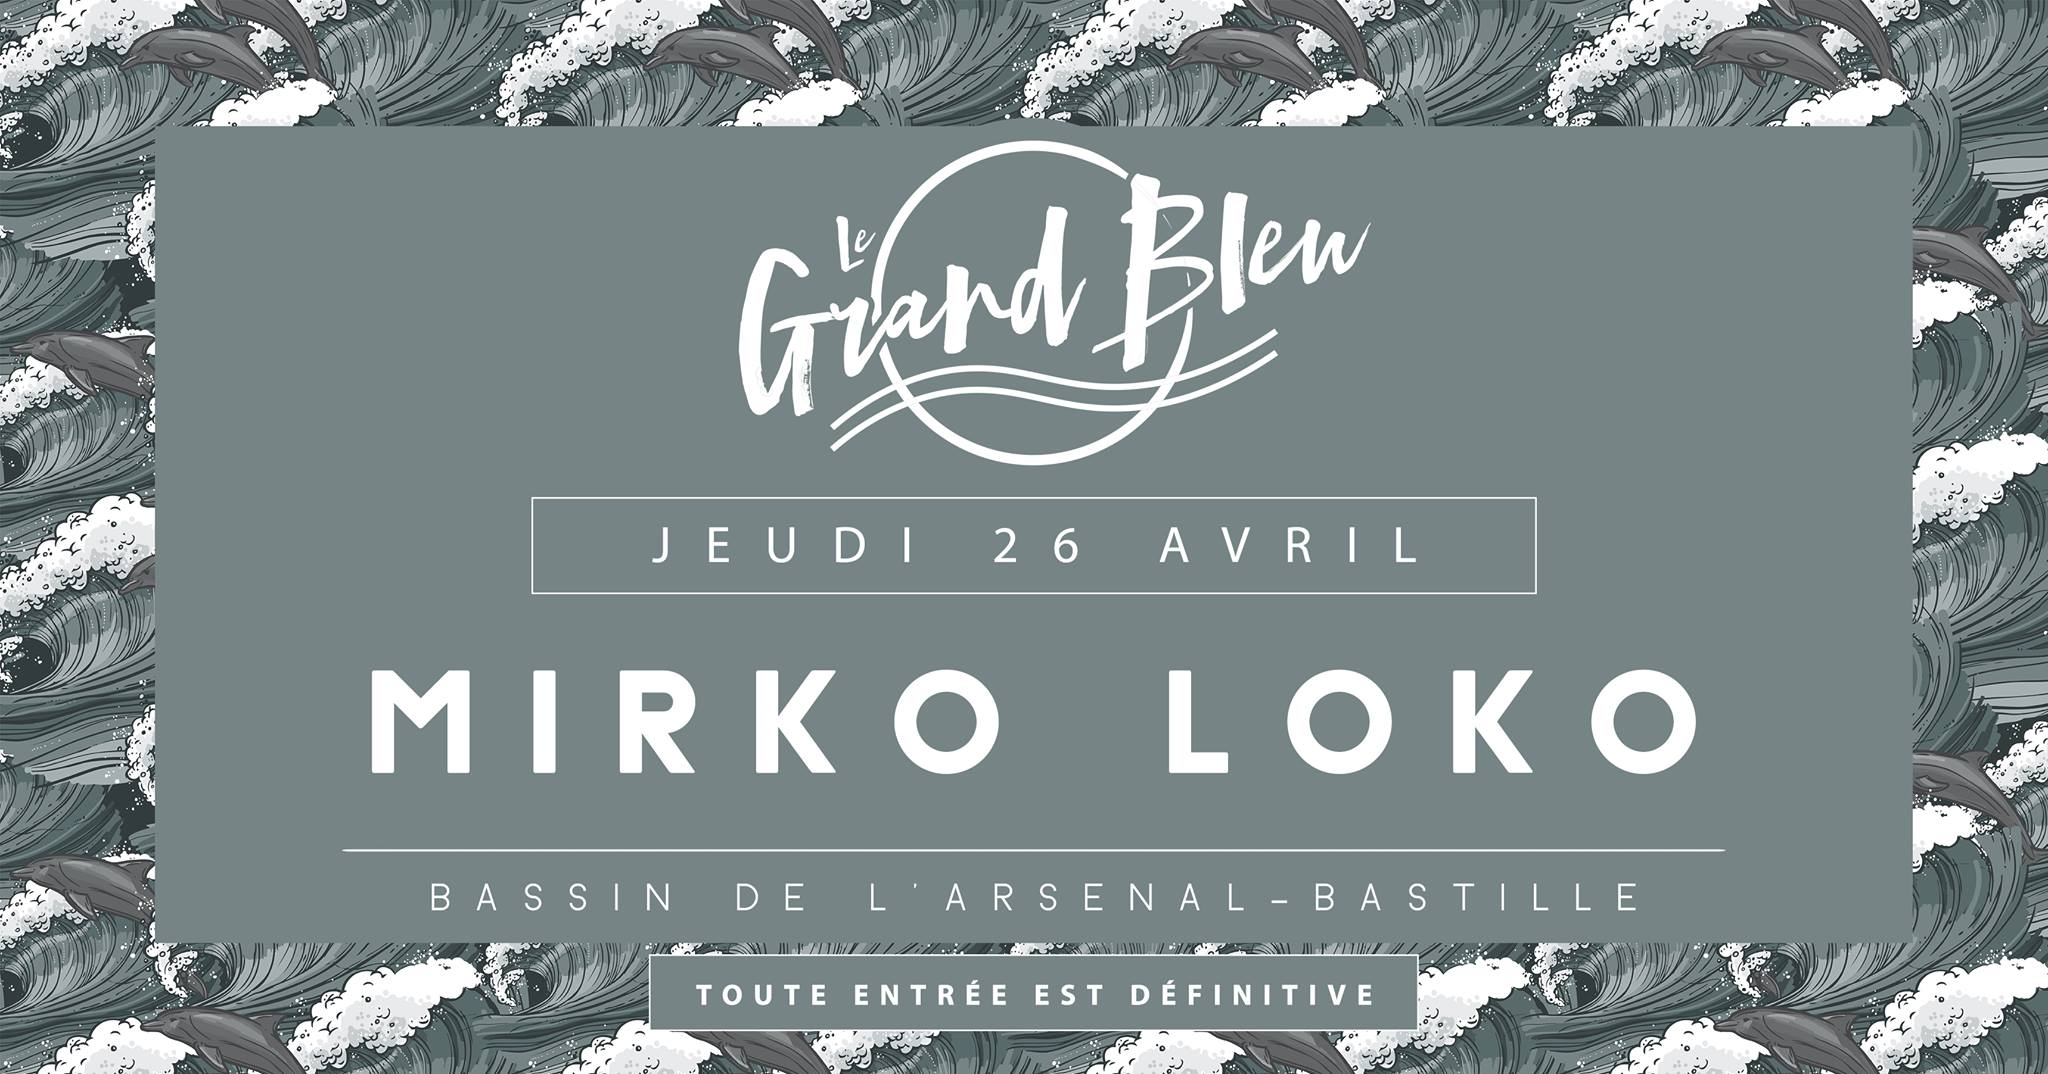 Mirko Loko - @Grand Bleu